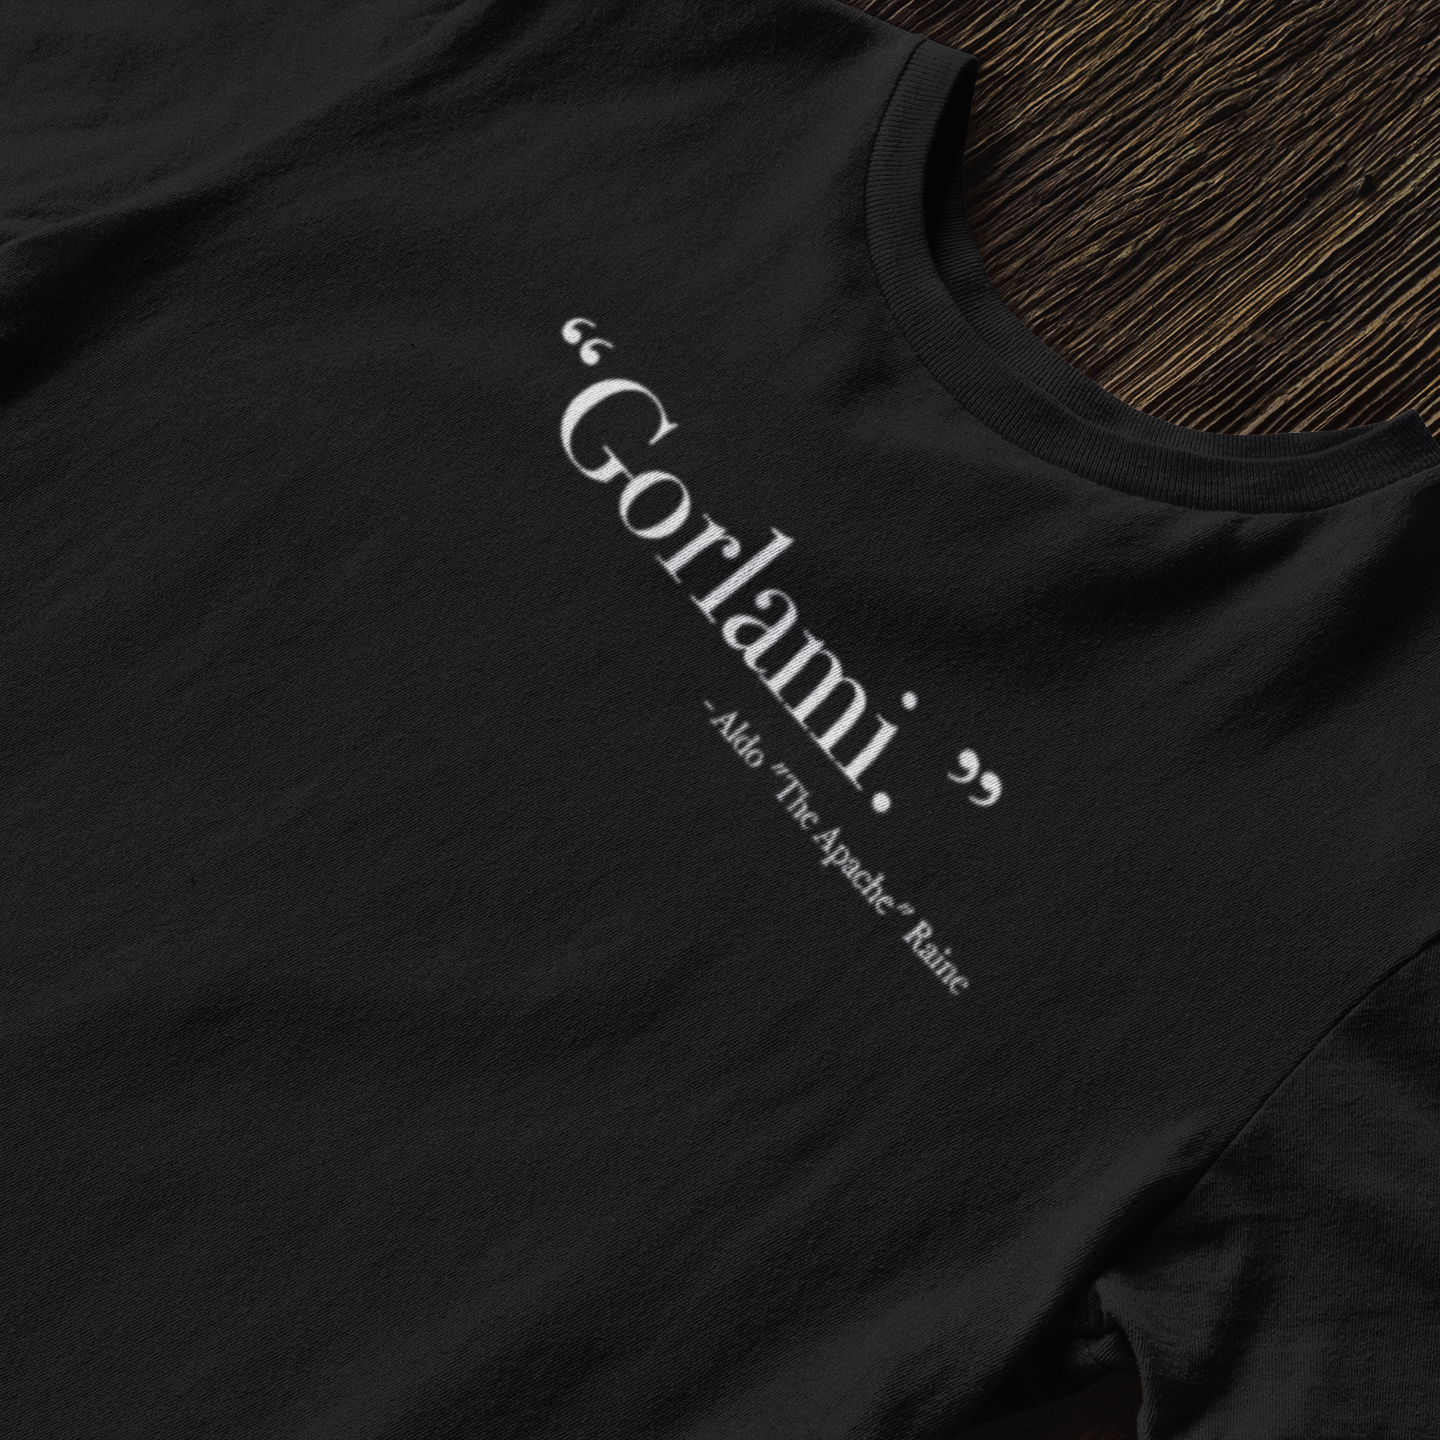 Say Gorlami - T-Shirt